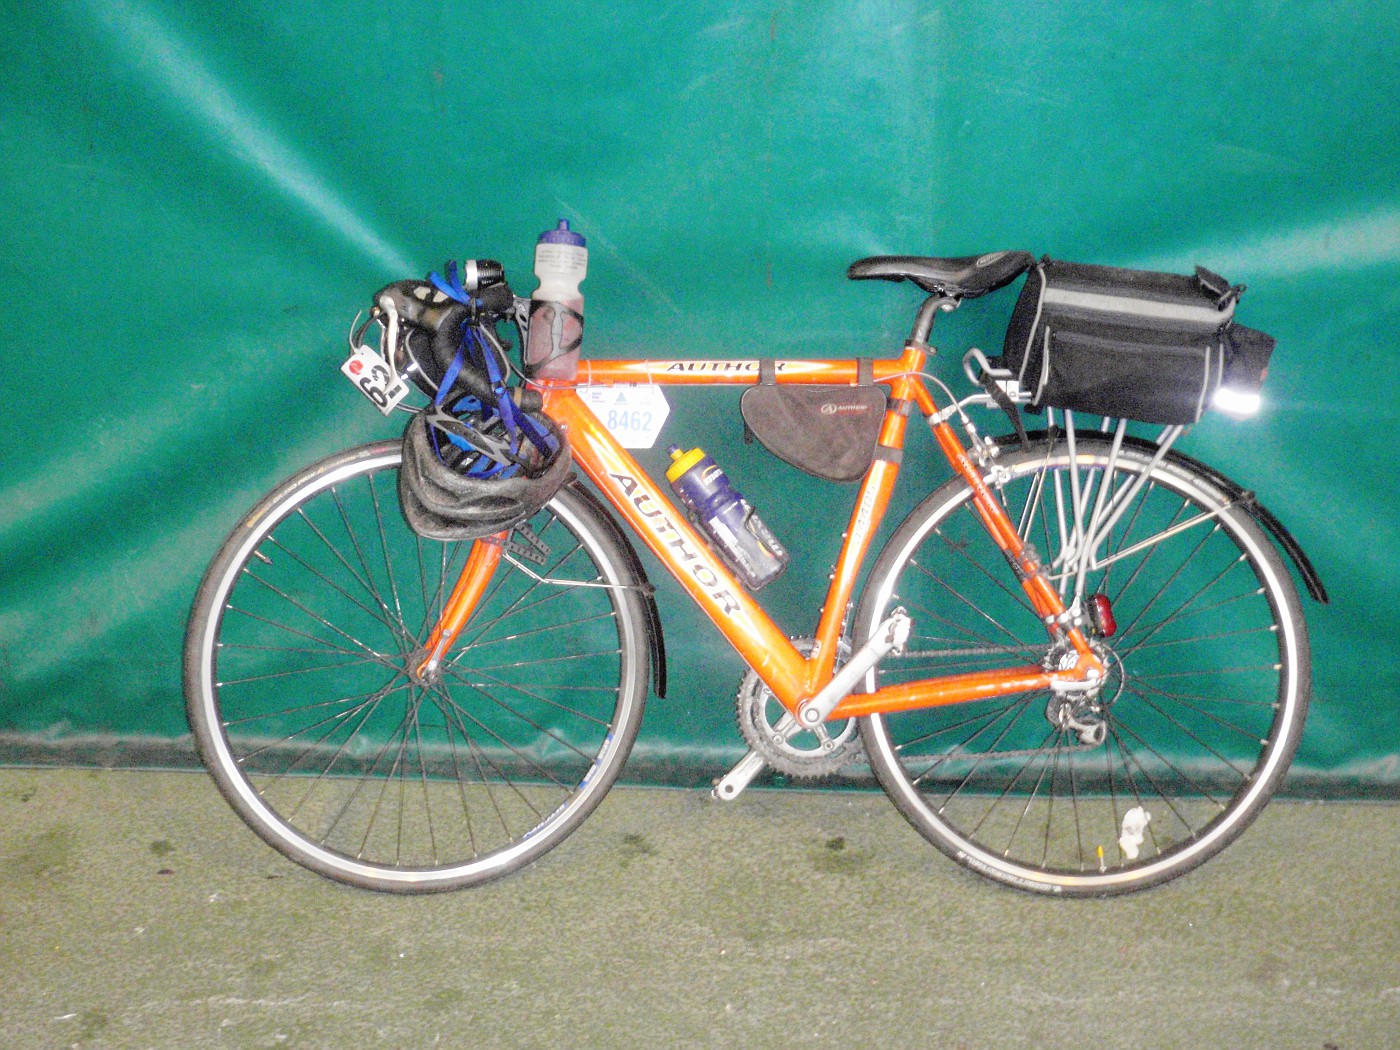 Tanja's bike